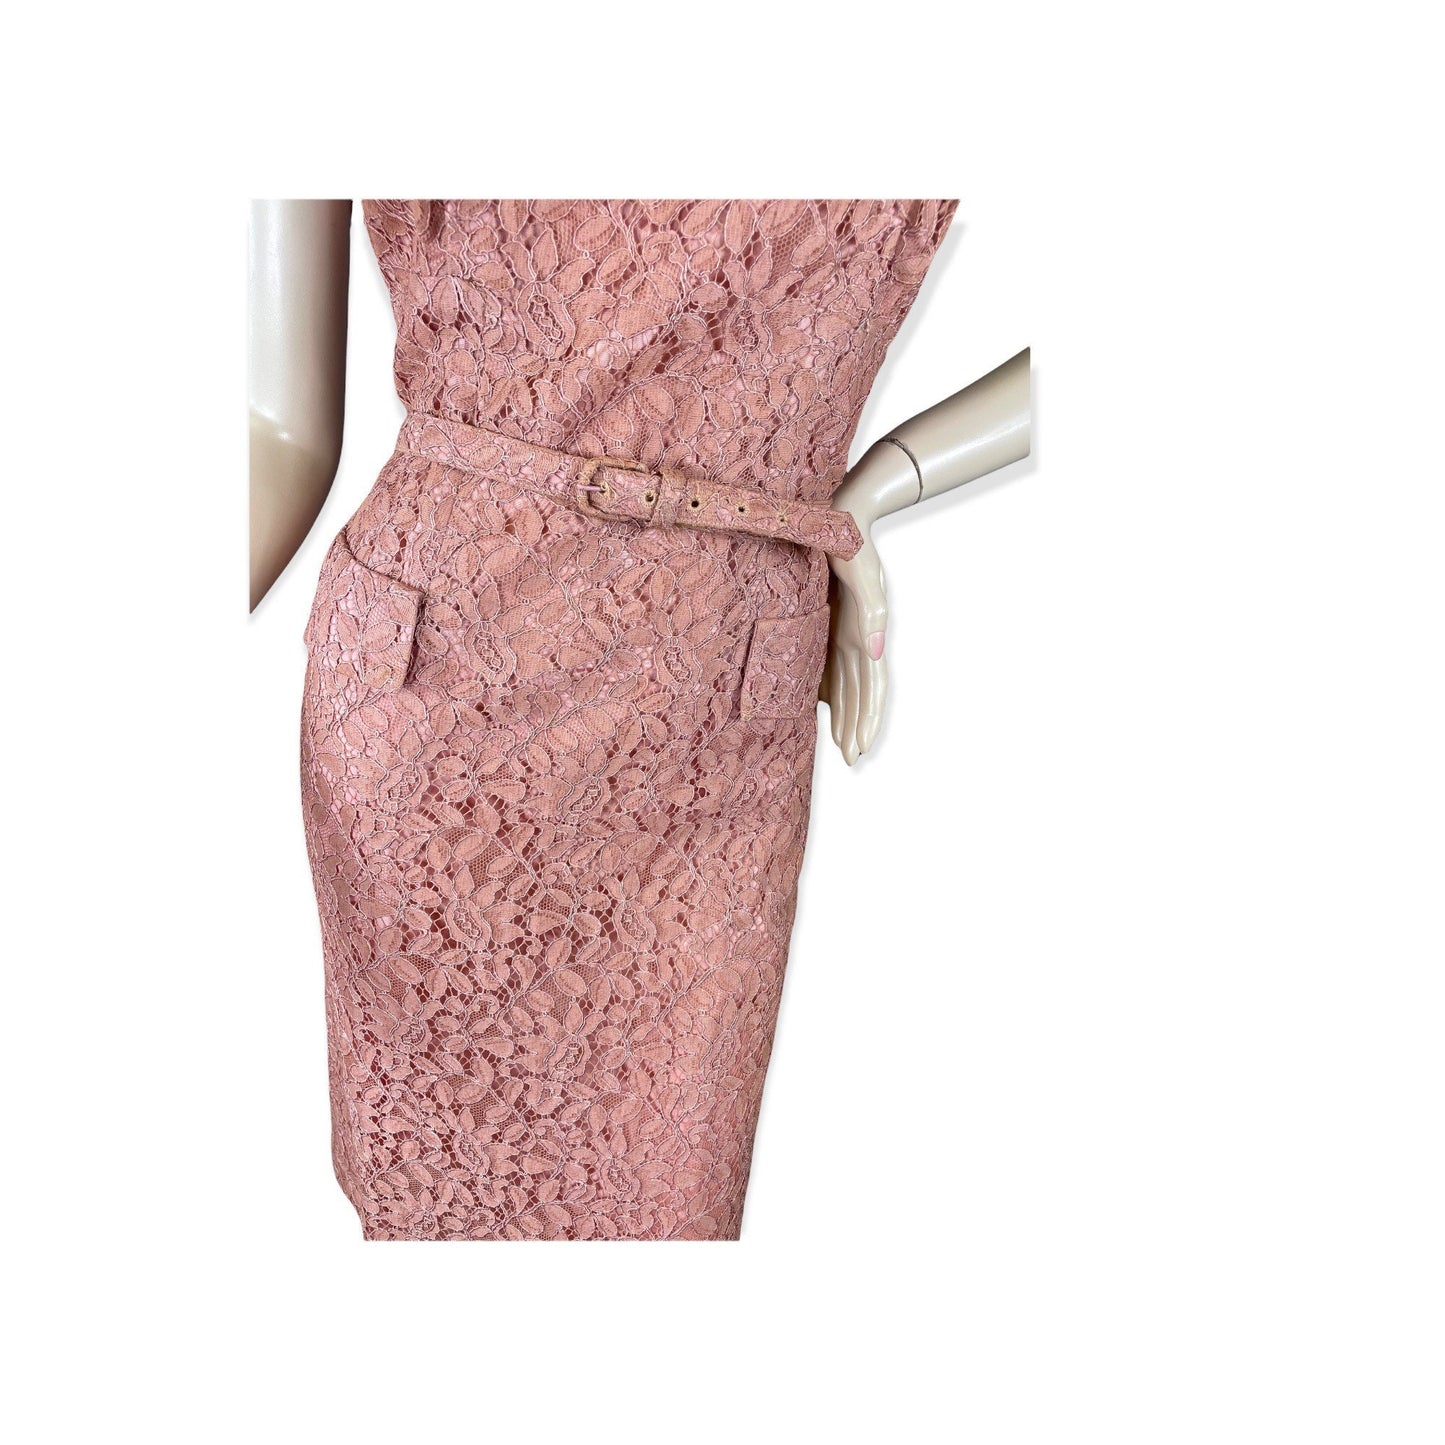 1950s Chantilly lace peplum dress in mauve pink by Joe Richman Size L